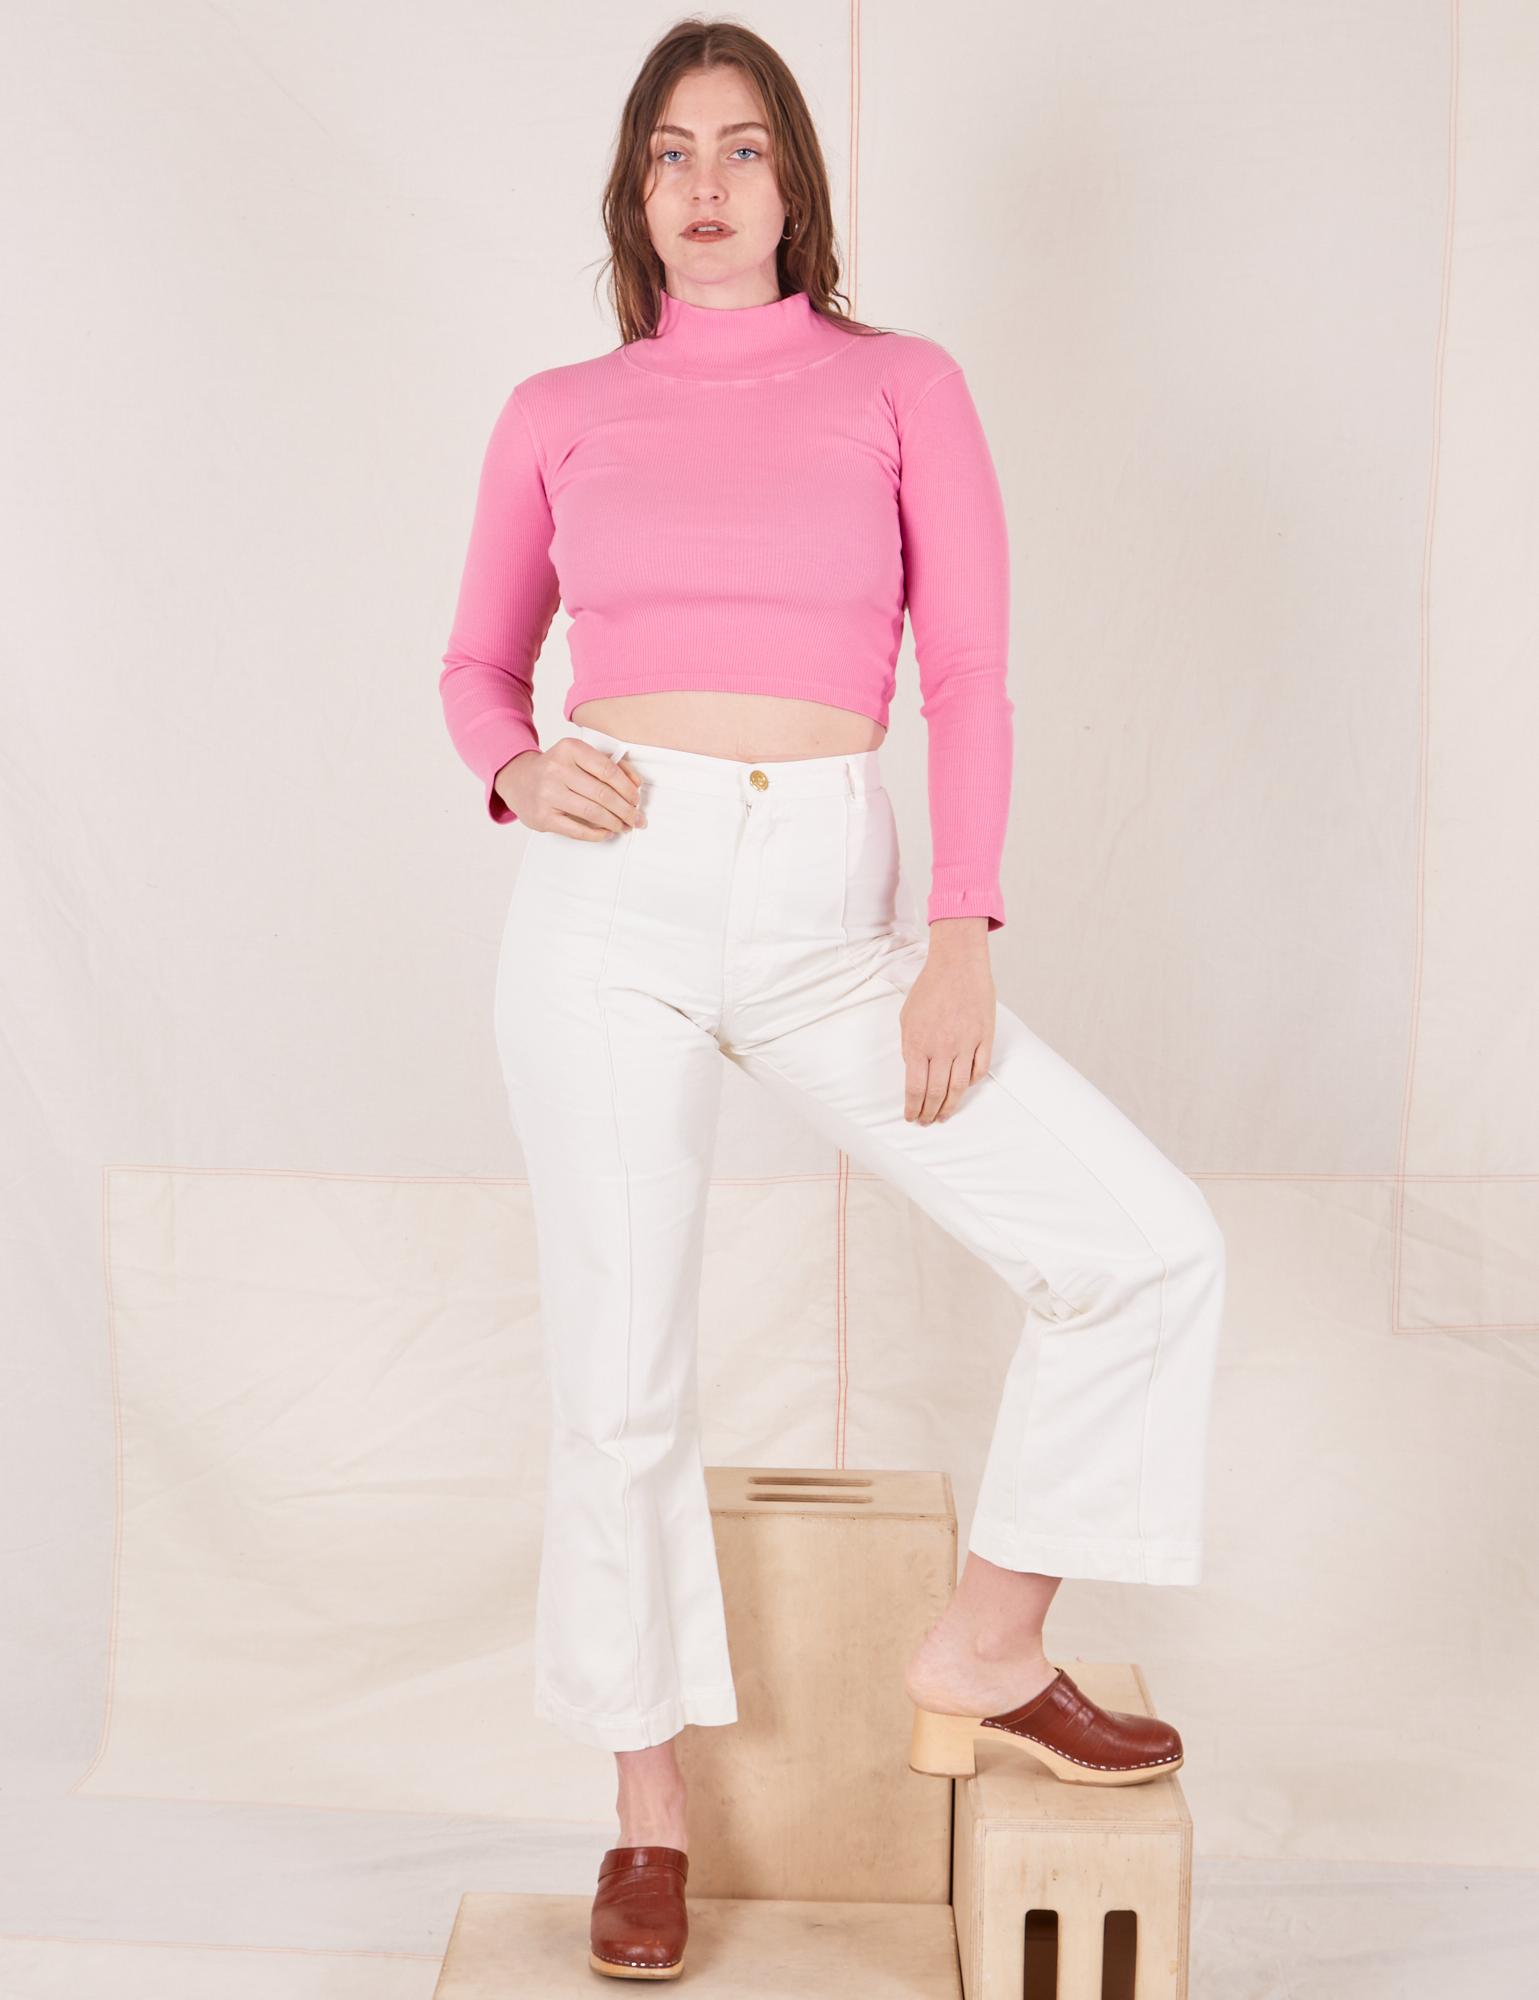 Allison is wearing Essential Turtleneck in Bubblegum Pink and vintage tee off-white Western Pants